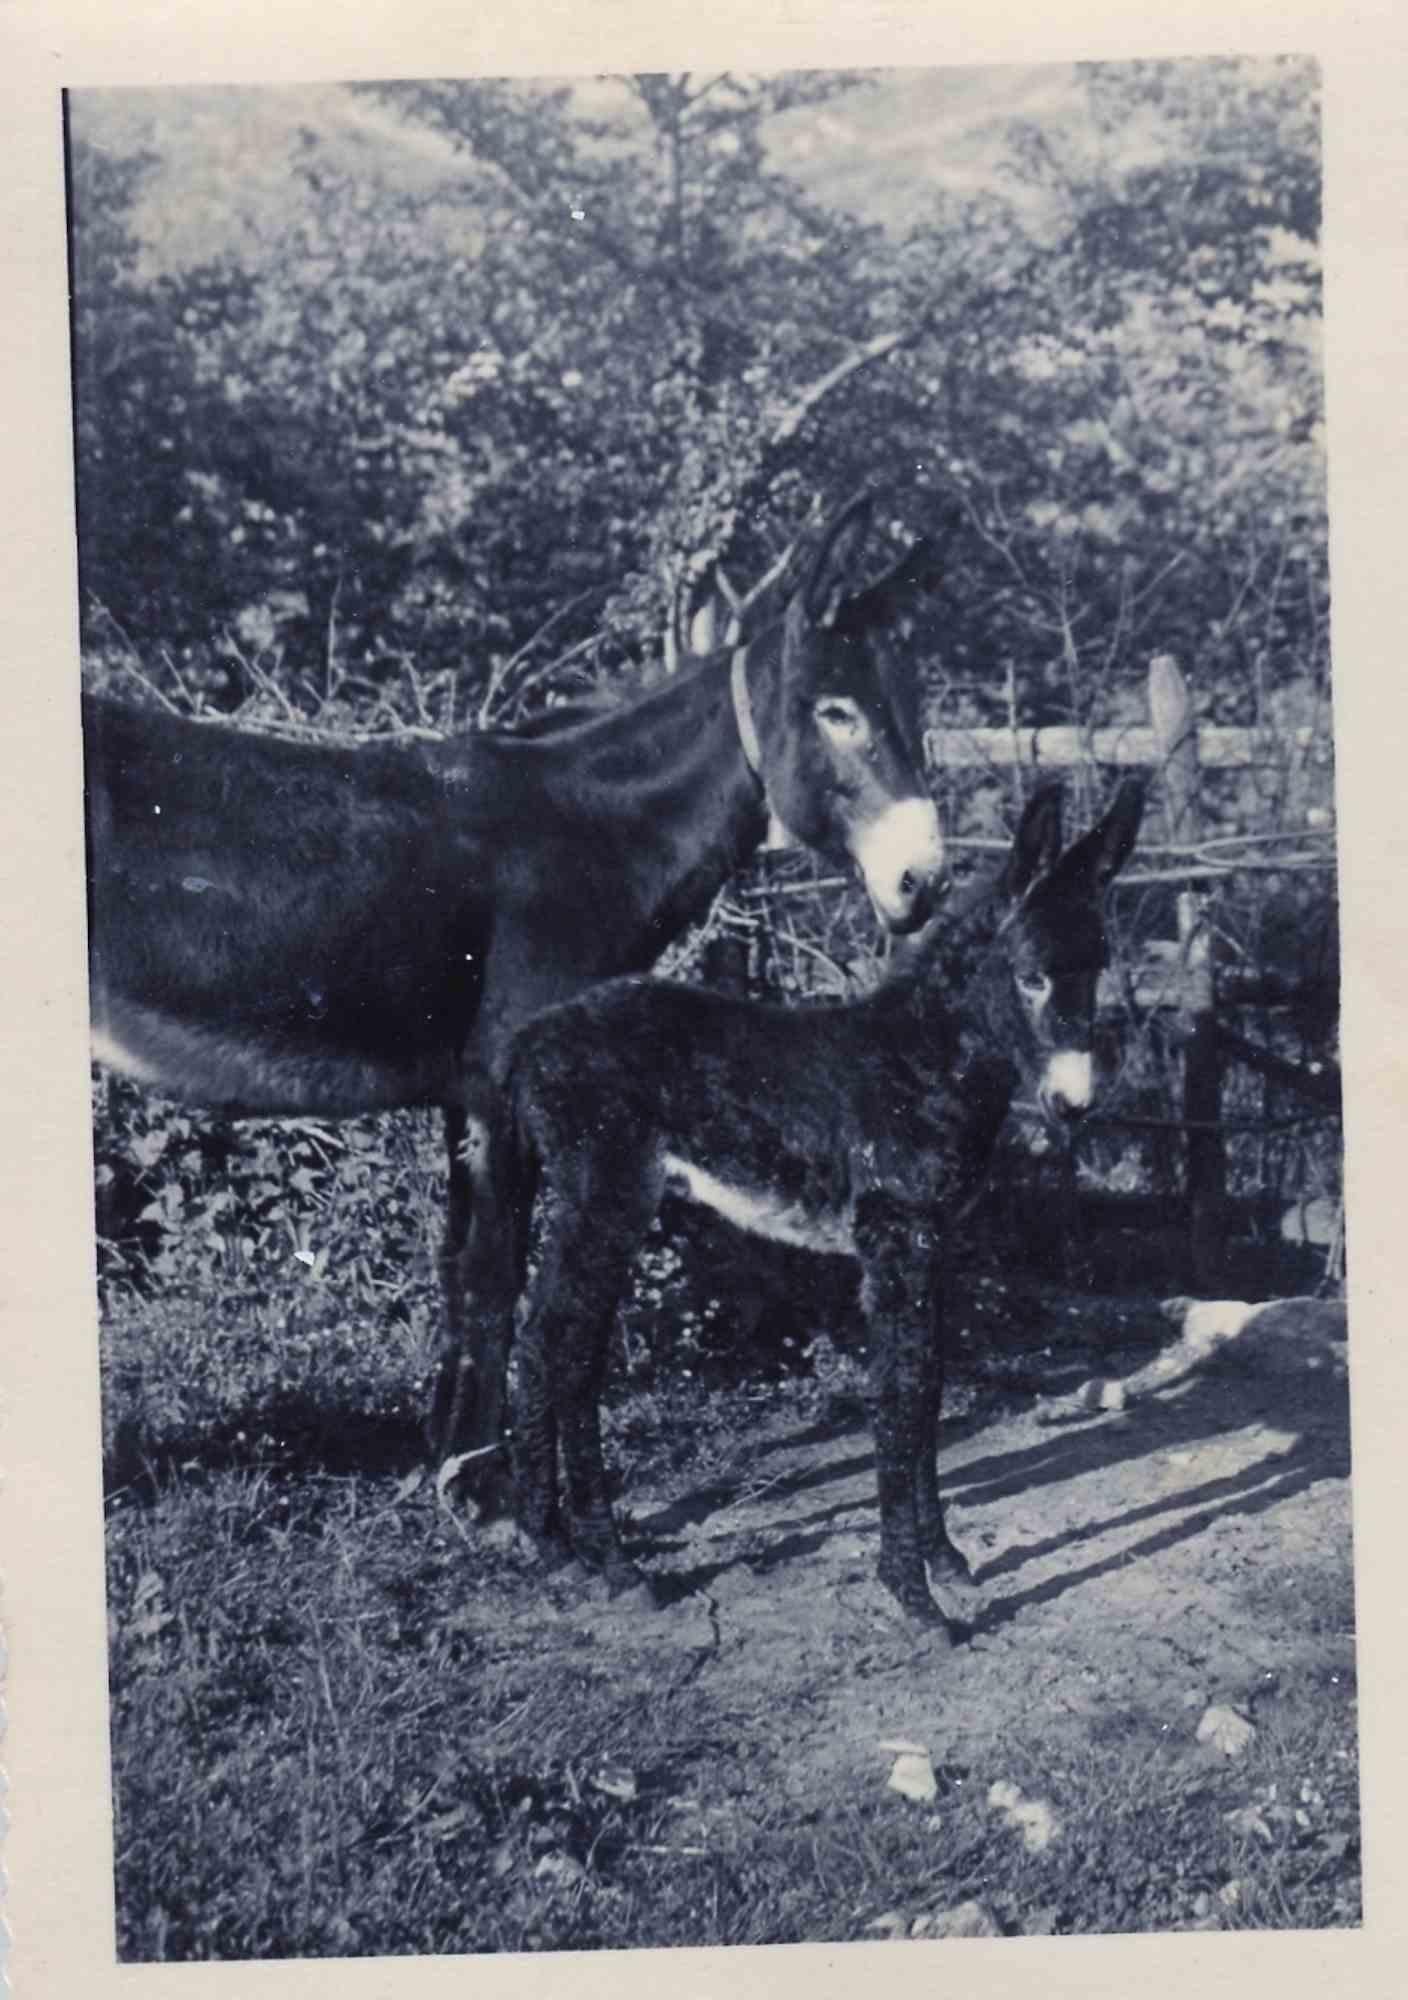 Unknown Figurative Photograph - Old days Photo - Donkeys - Vintage Photo - Mid-20th Century